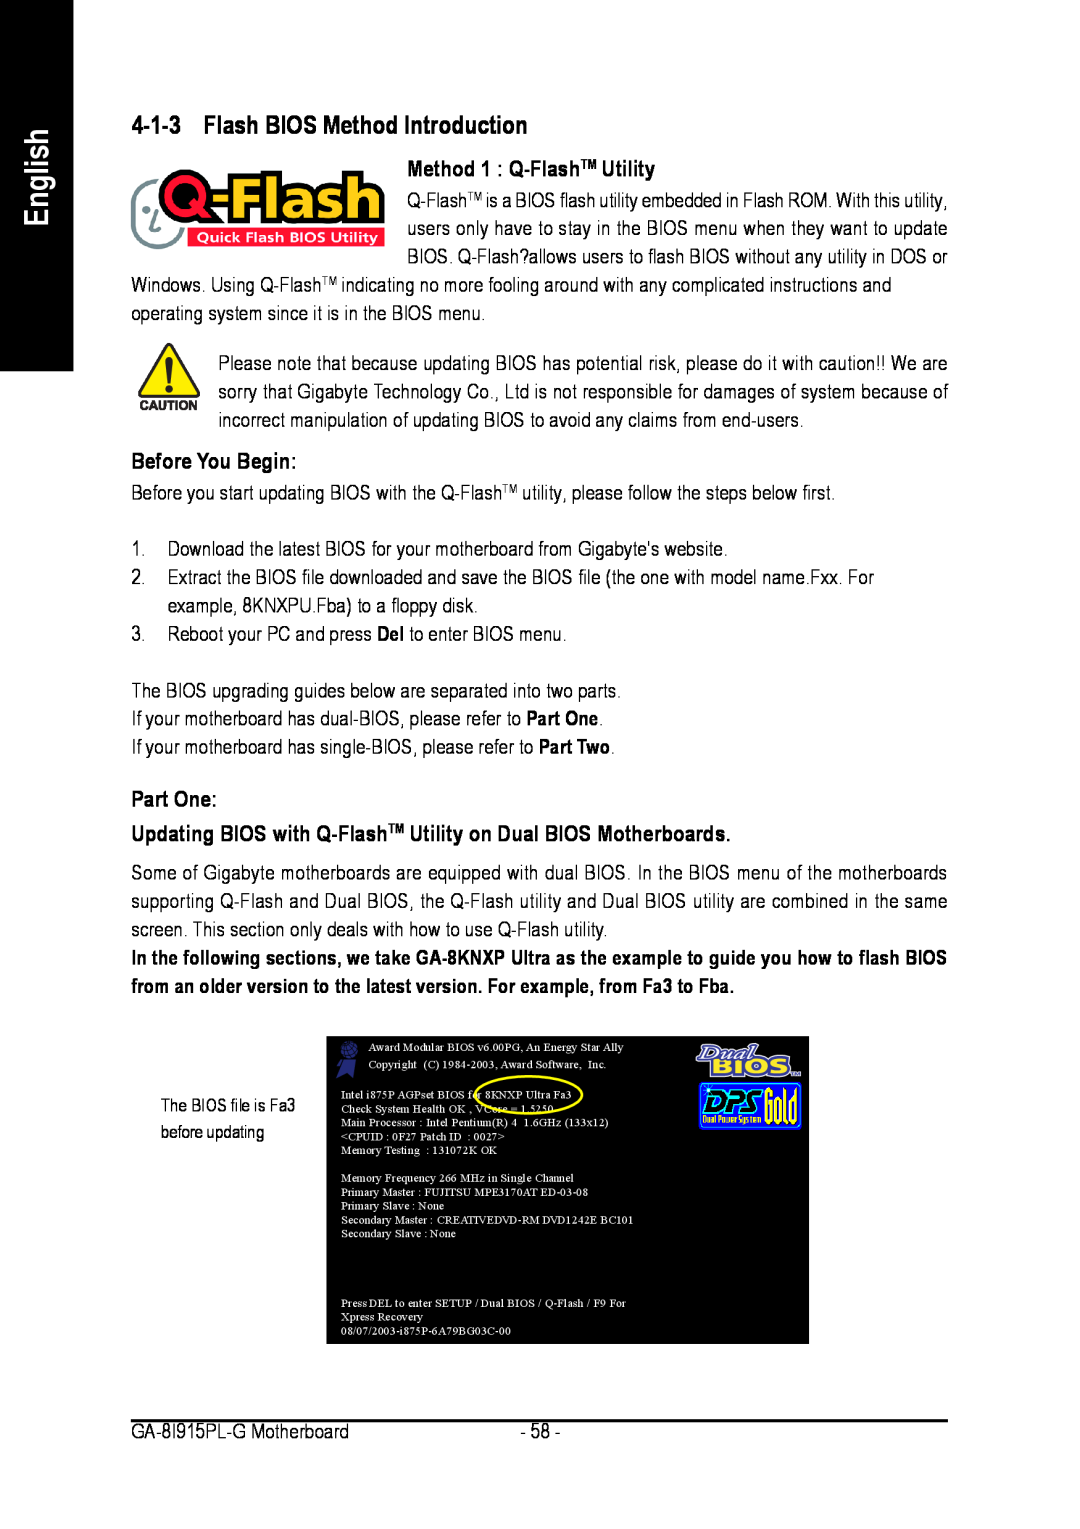 Intel GA-8I915PL-G Flash BIOS Method Introduction, Method 1 Q-FlashTM Utility, Before You Begin, Part One, English 